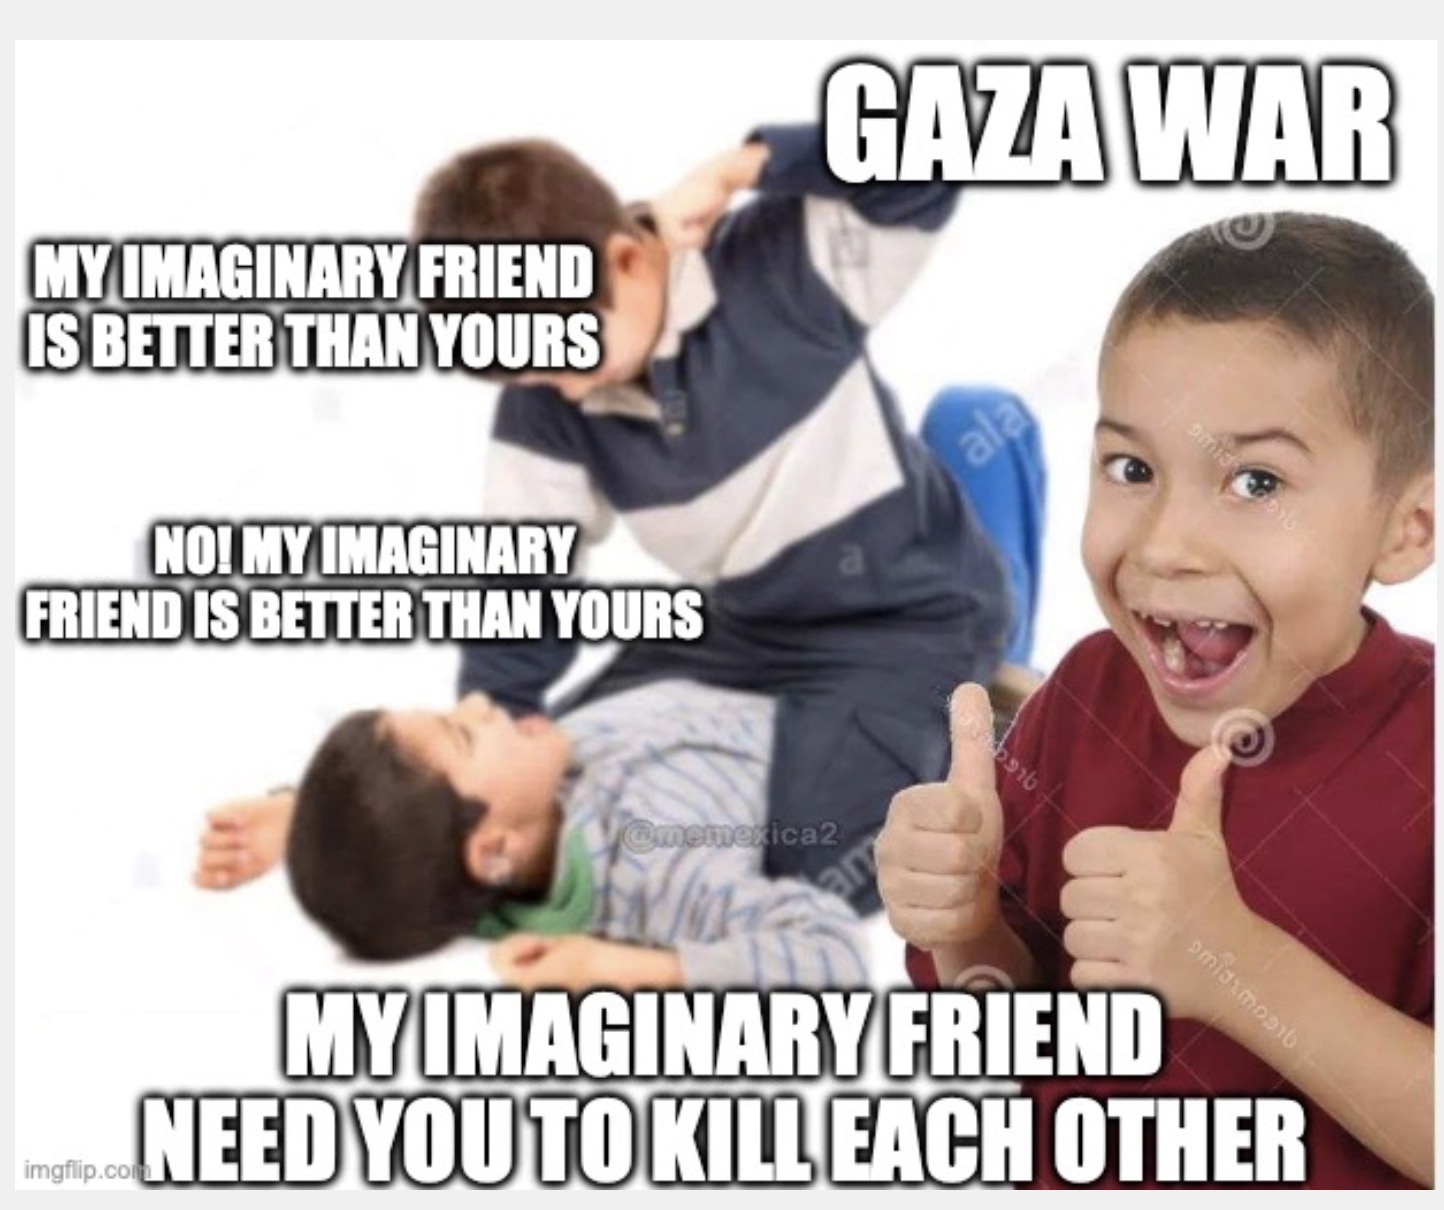 Gaza War. My imaginary friend is better than your imaginary friend. No MY imaginary friend is better. My imaginary friend needs you to kill each other.